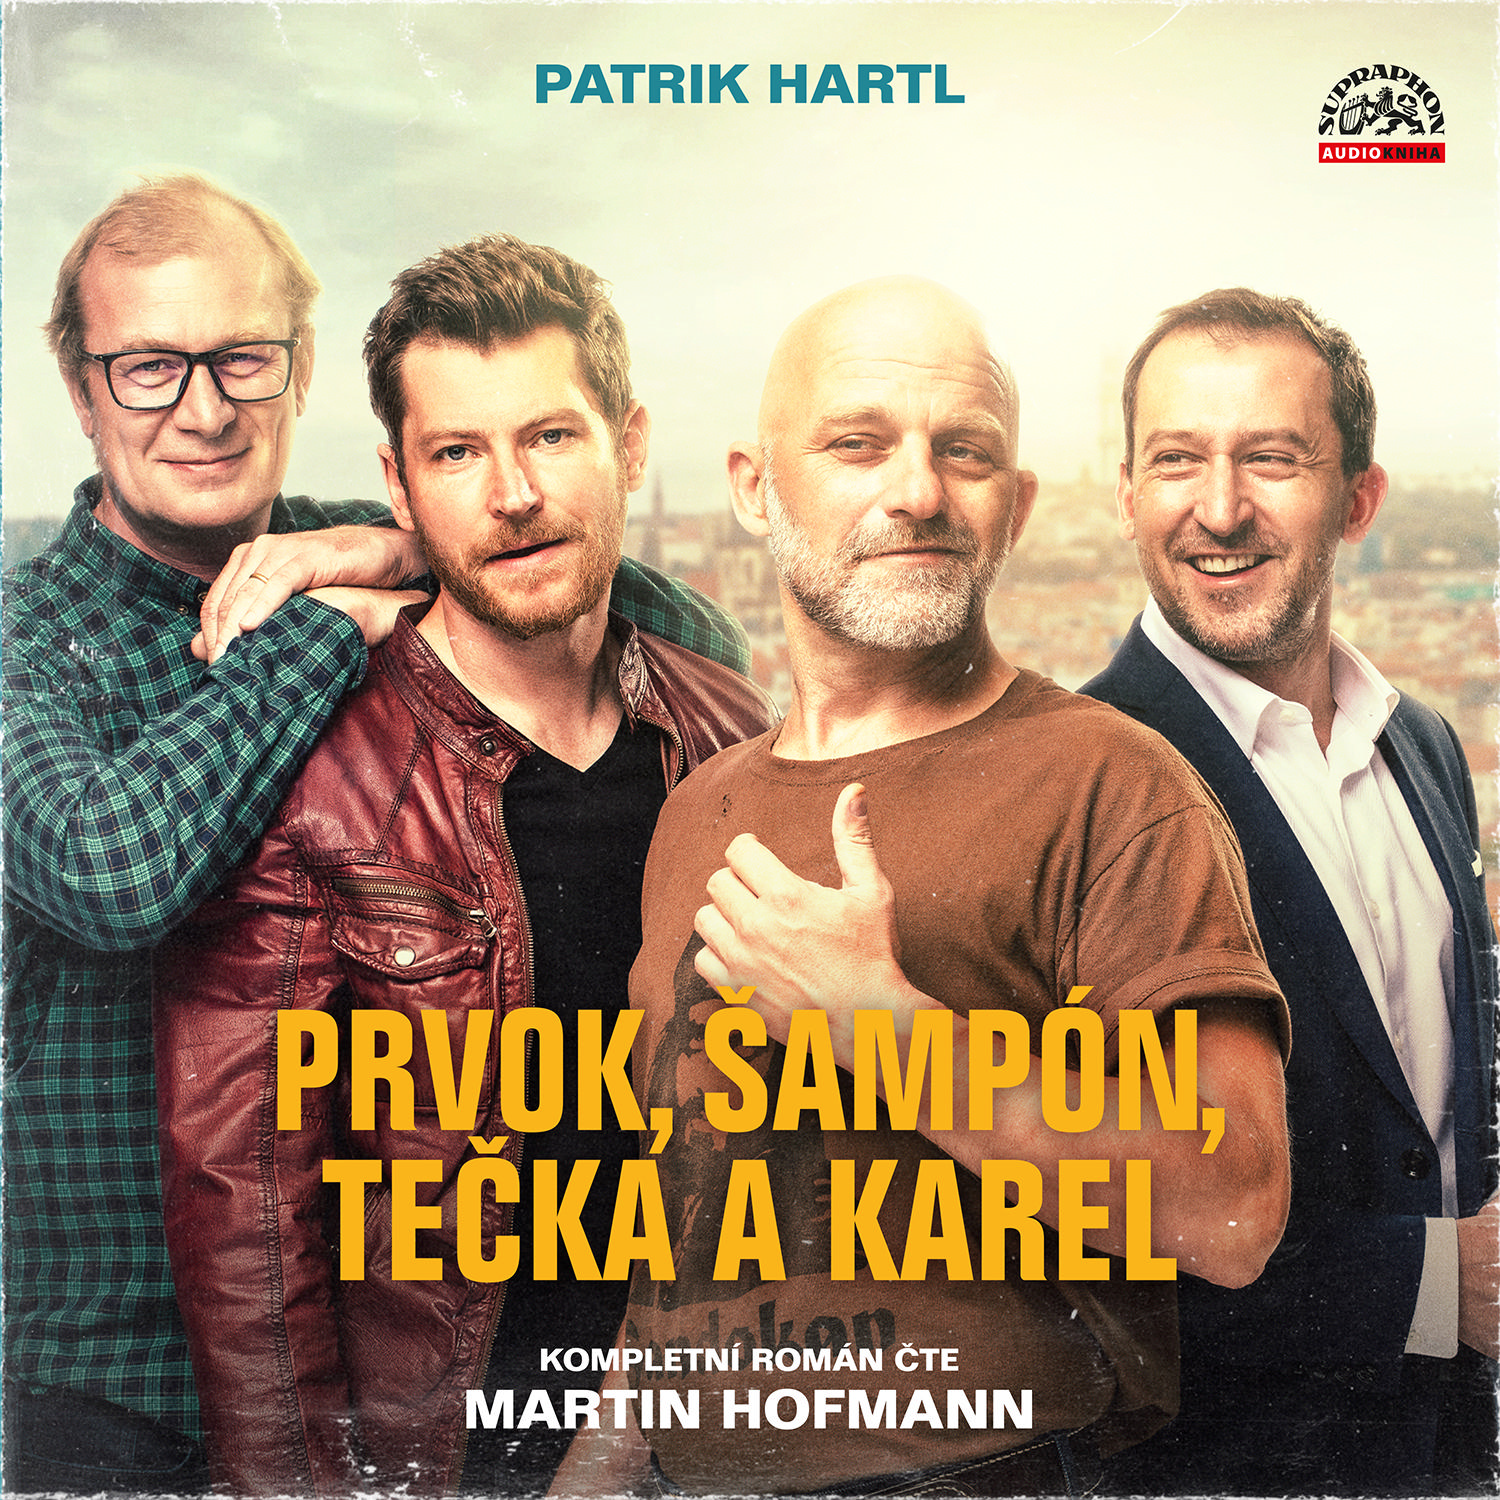 CD Shop - MARTIN HOFMANN HARTL: PRVOK, SAMPON, TECKA A KAREL (MP3-CD)